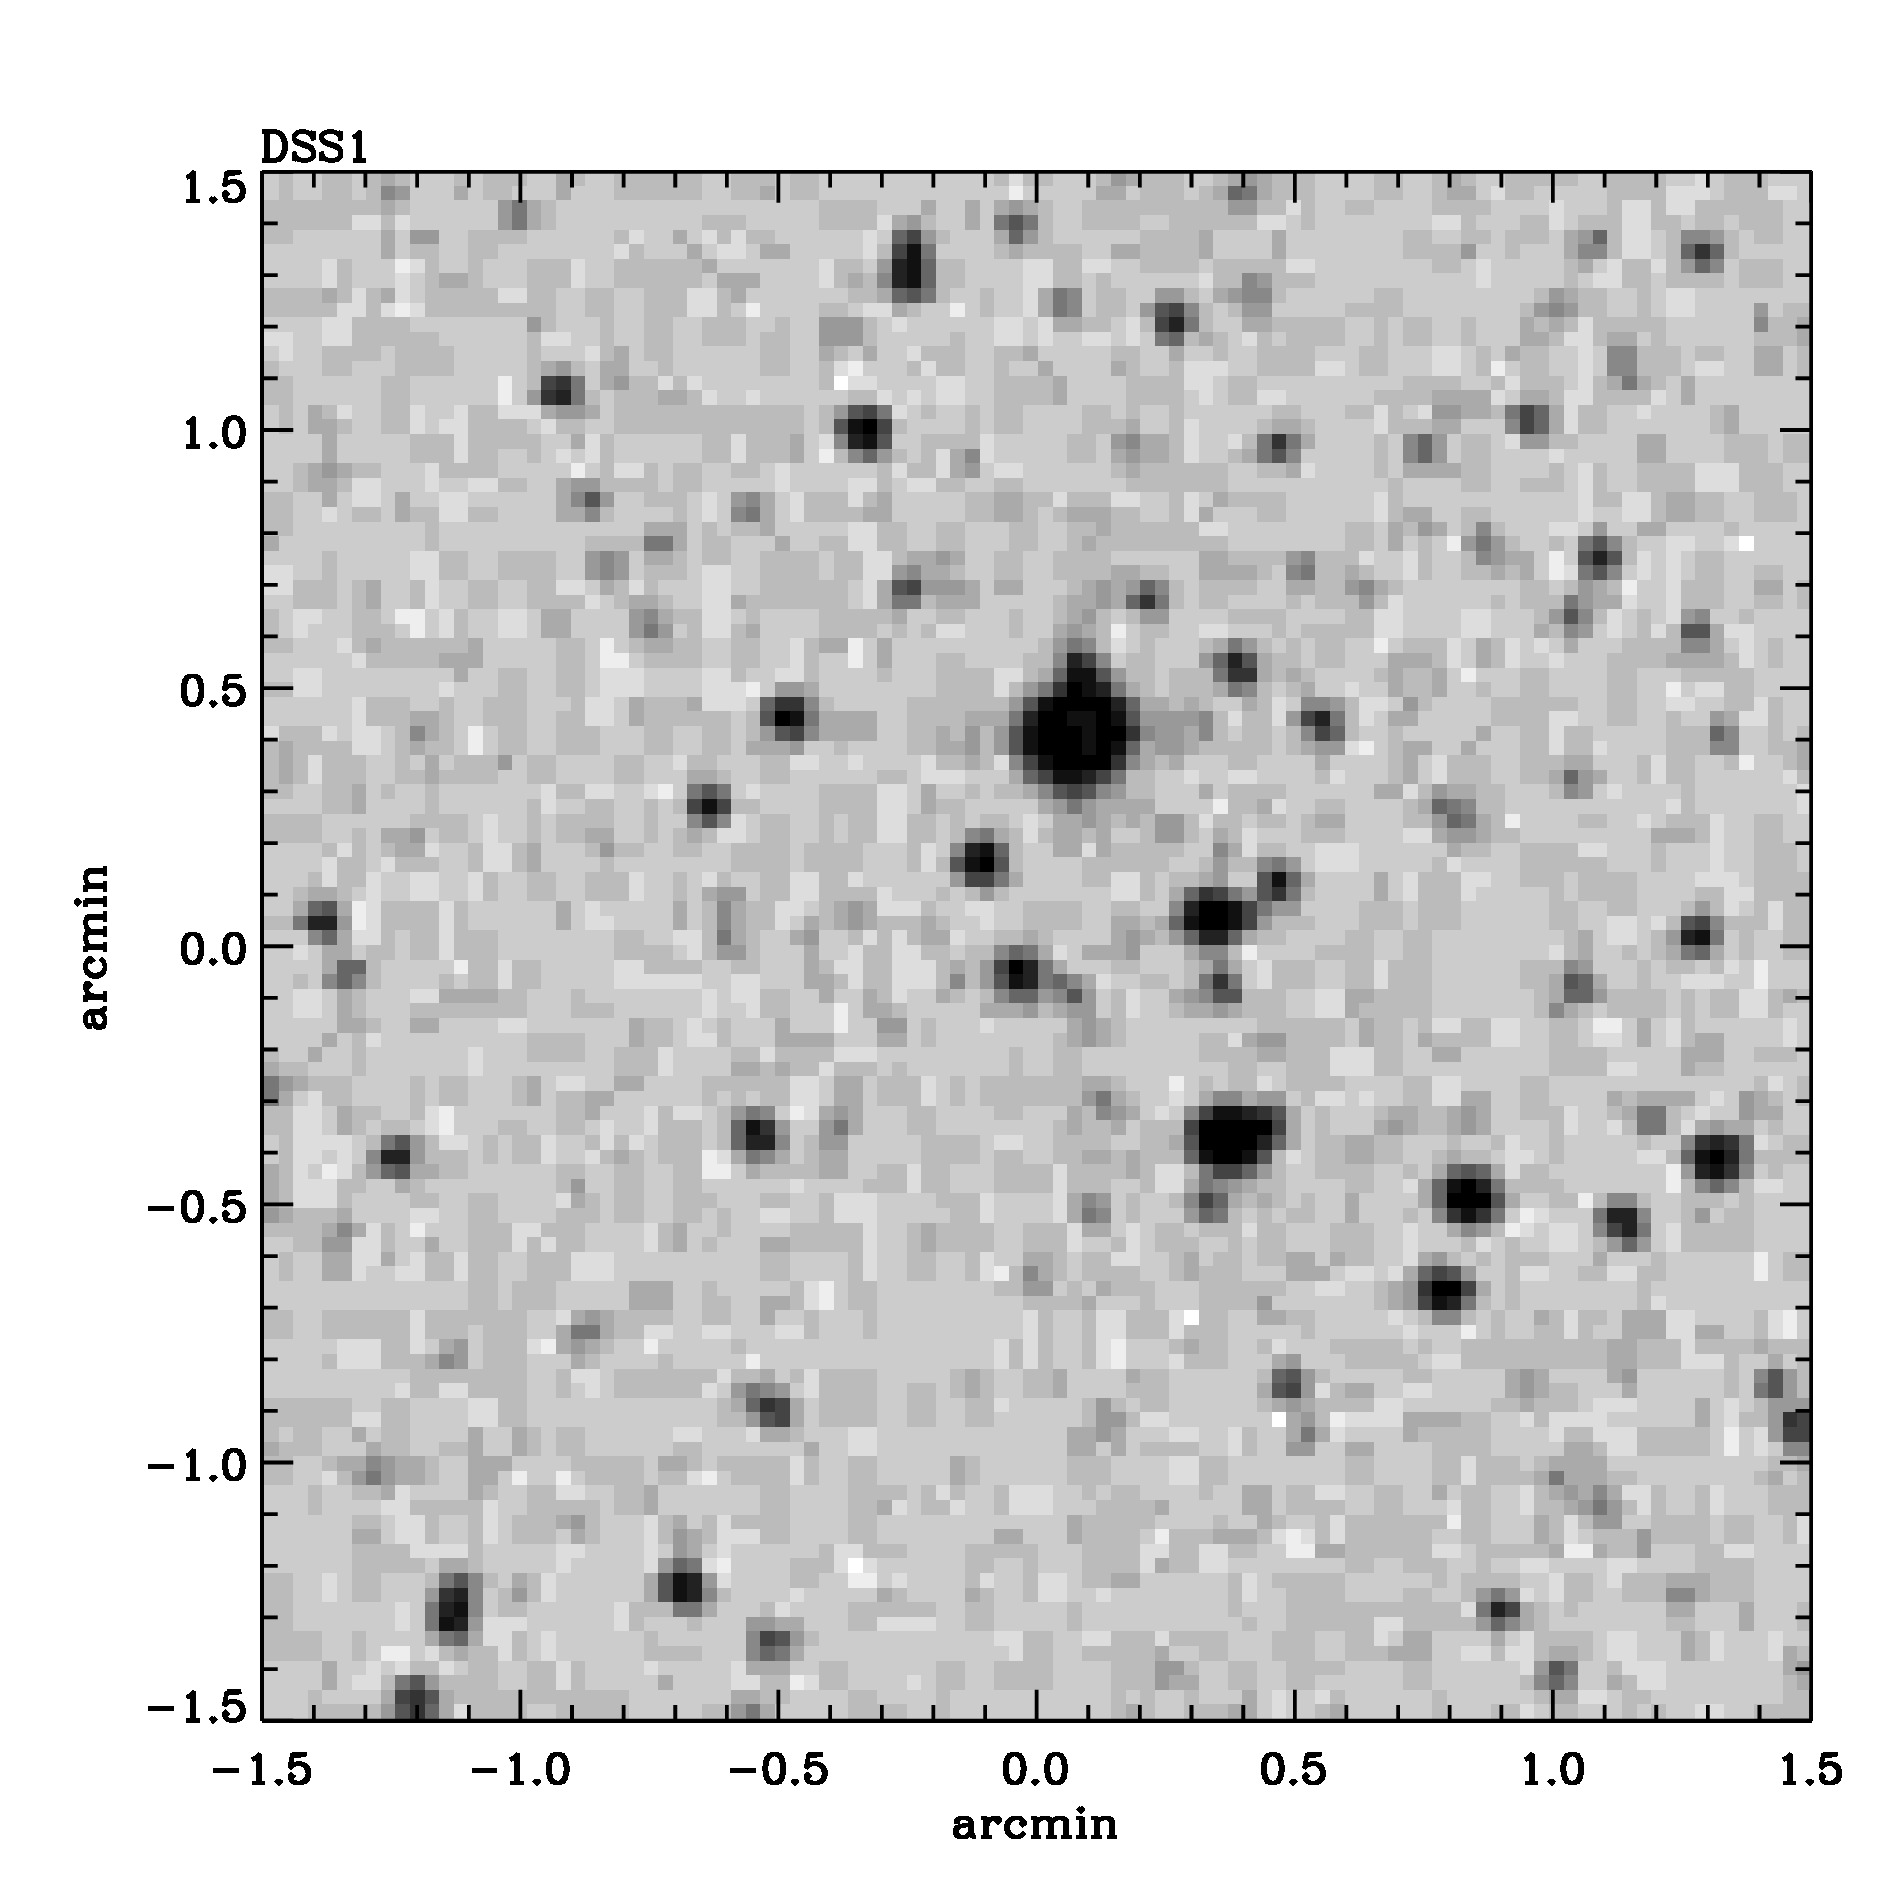 Optical image for SWIFT J2127.4+5654